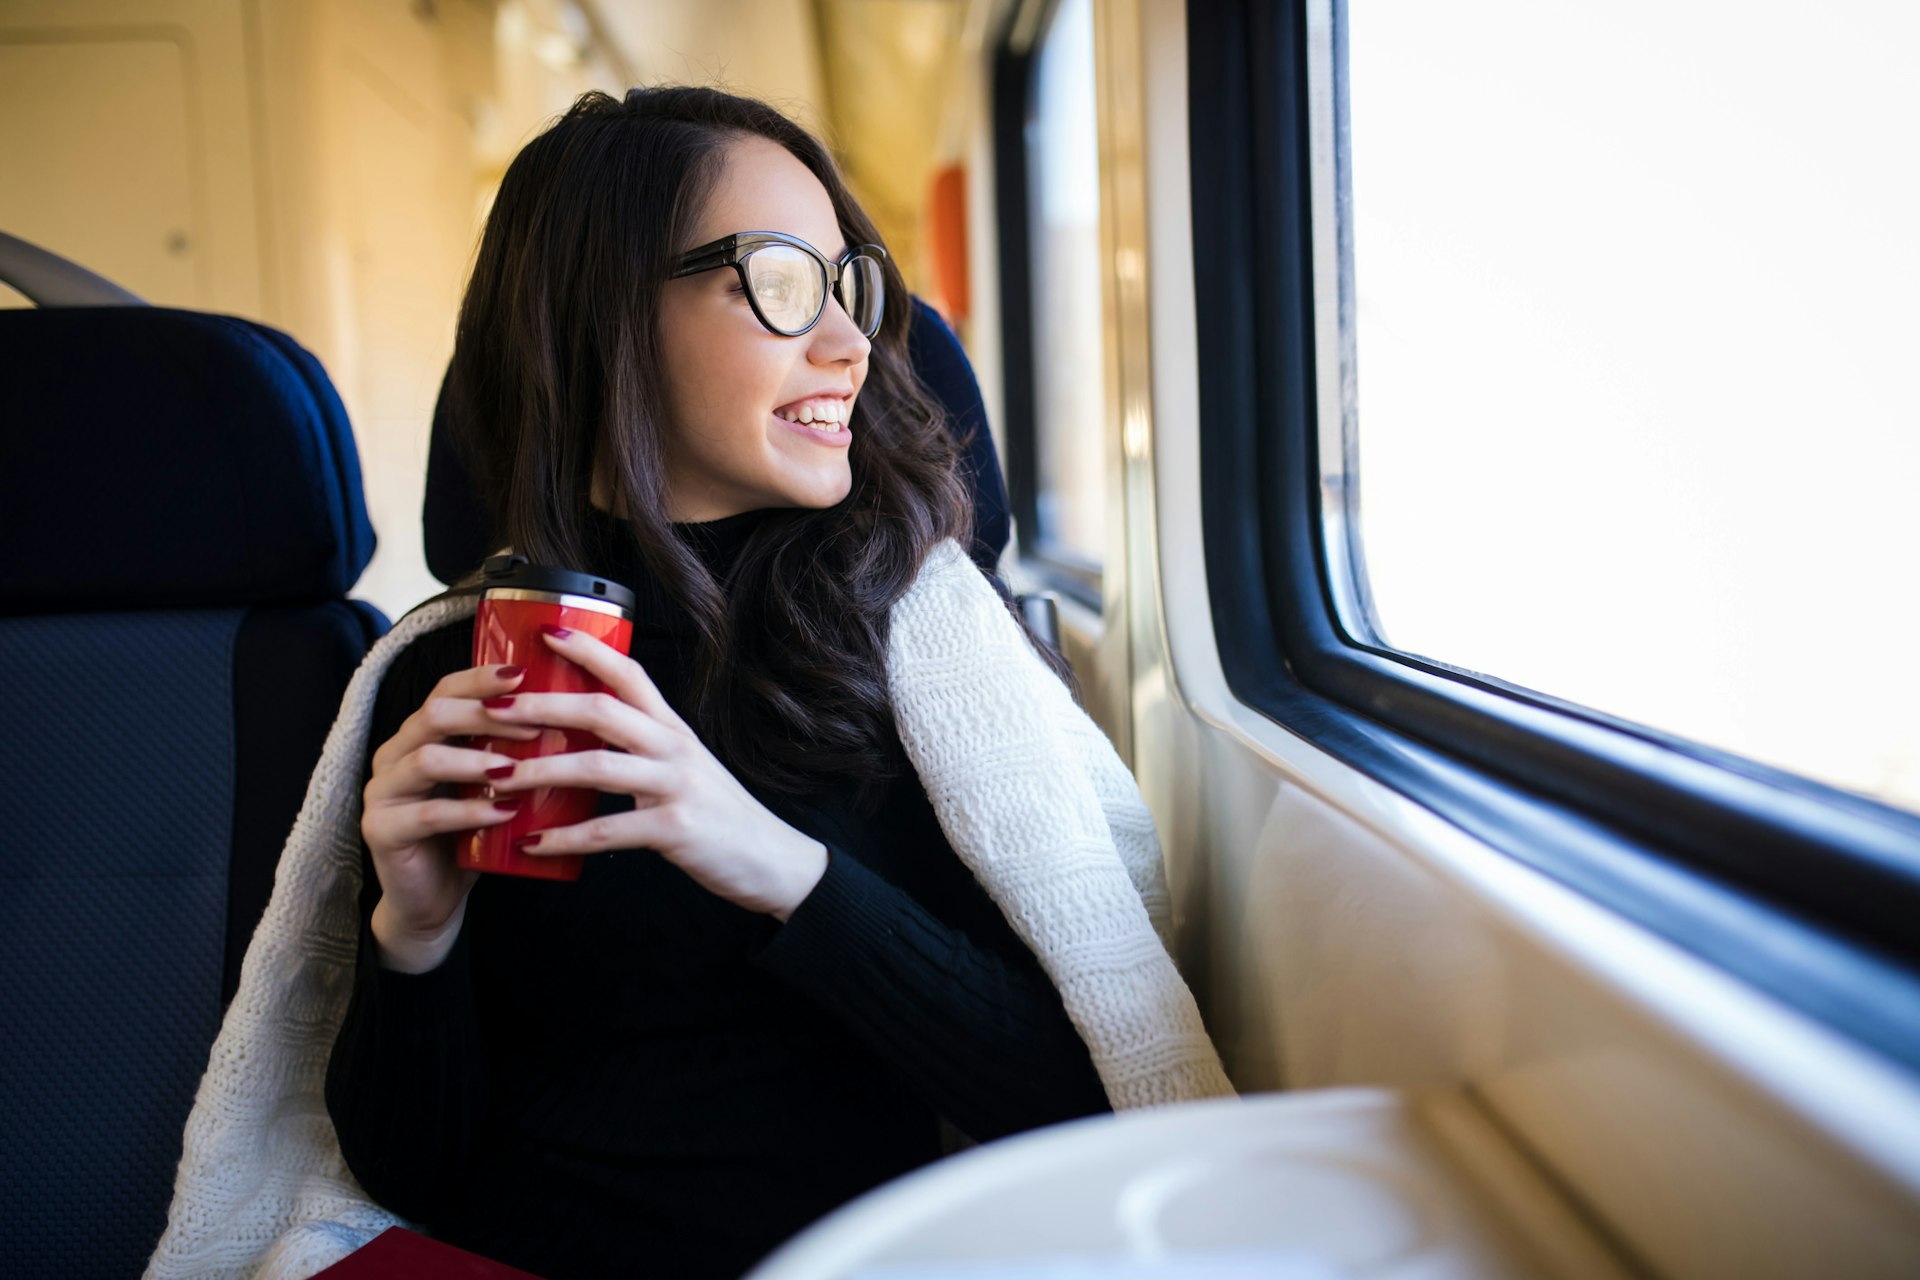 Young beautiful woman looking through the train window.